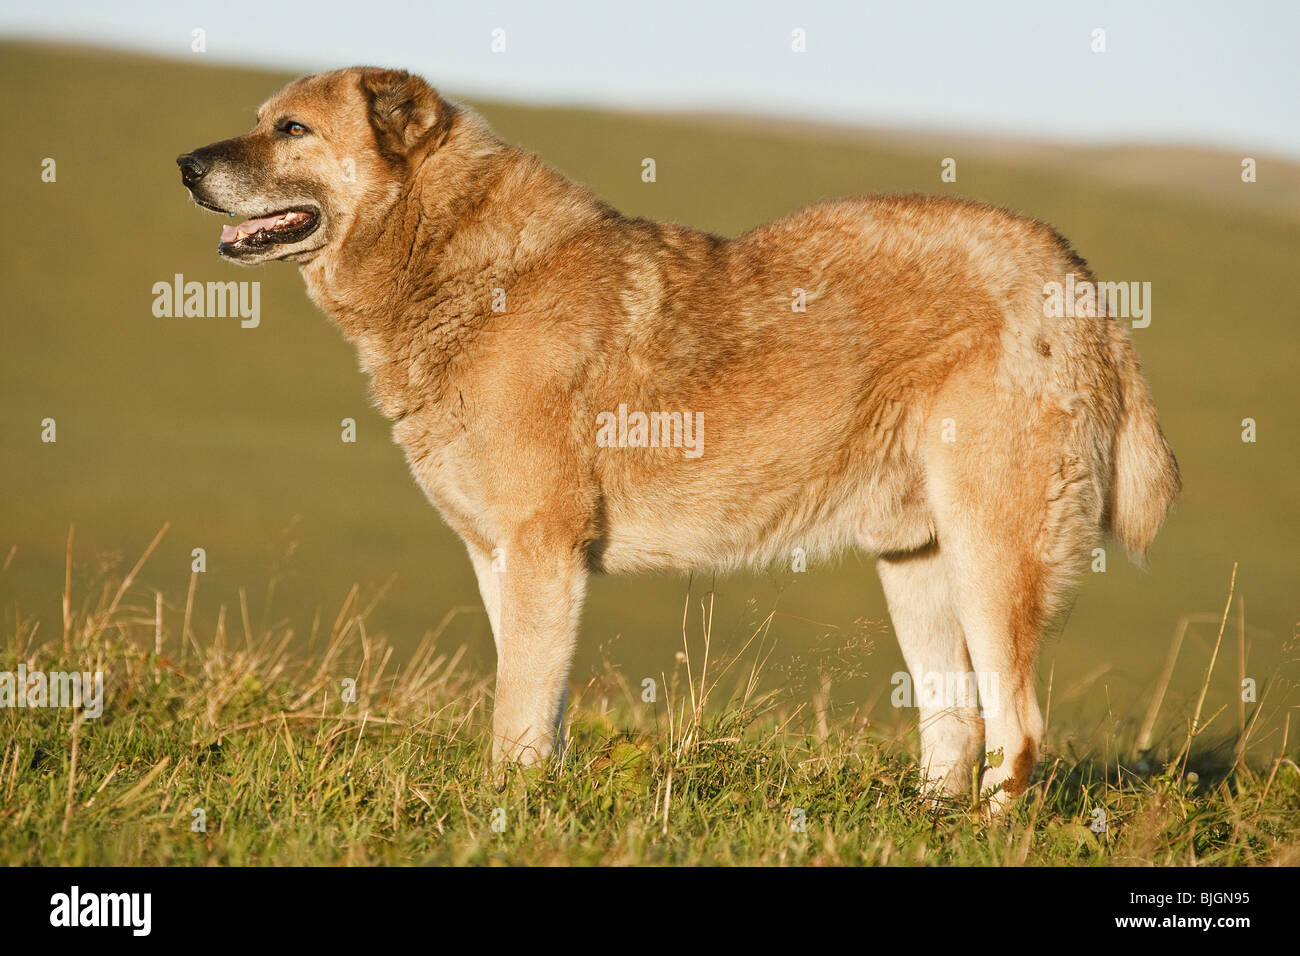 Transcaucasian Ovtcharka dog standing Stock Photo